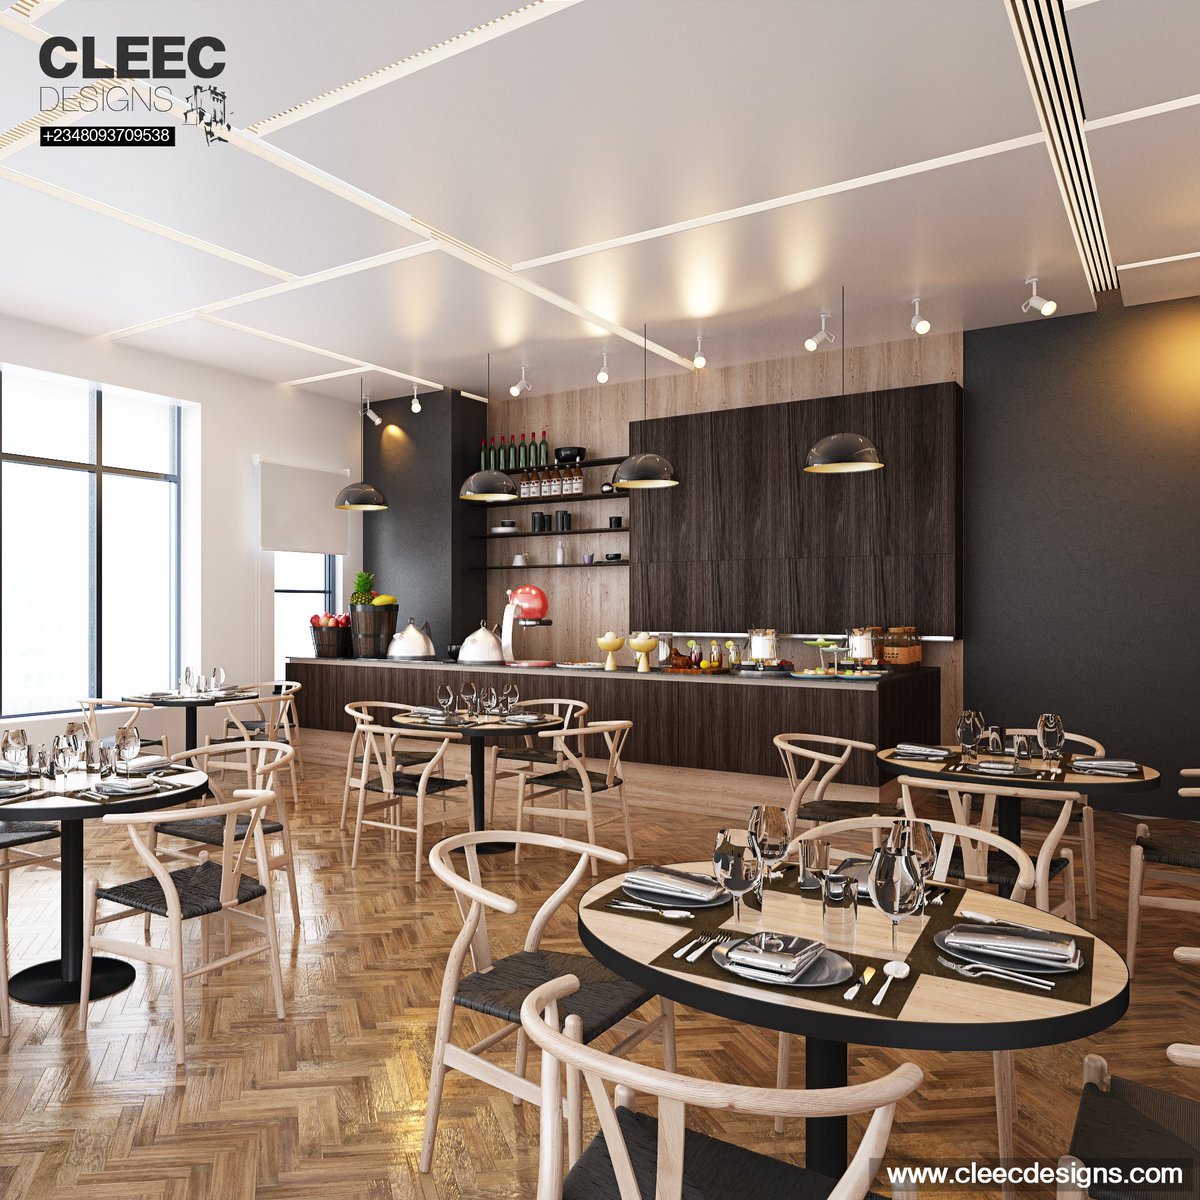 Cleec Designs On Twitter Coffee Shop Design Jide Render